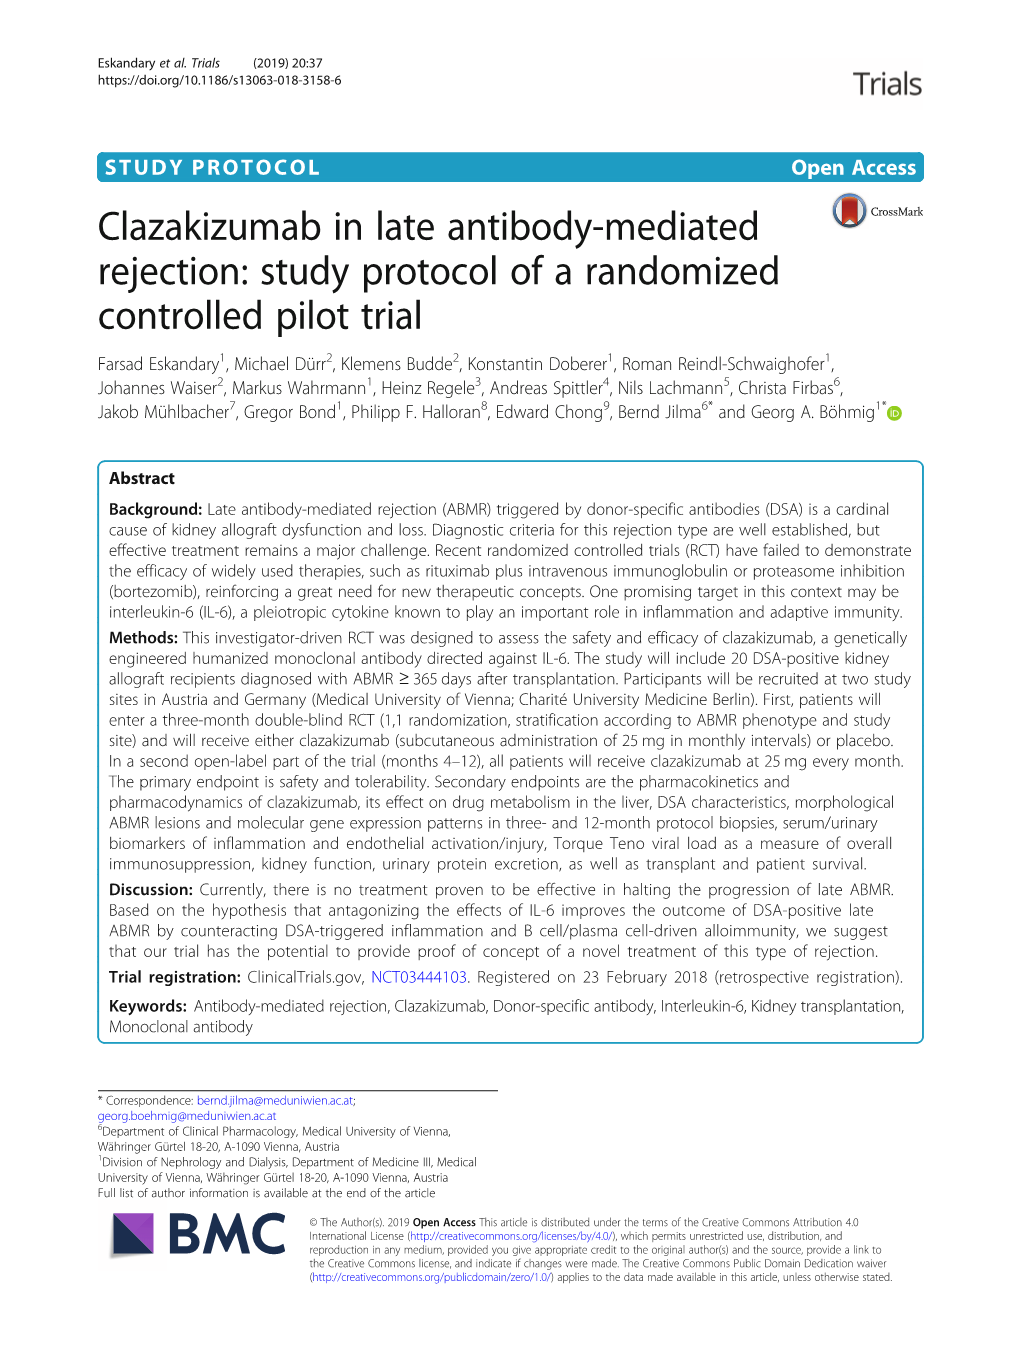 Clazakizumab in Late Antibody-Mediated Rejection